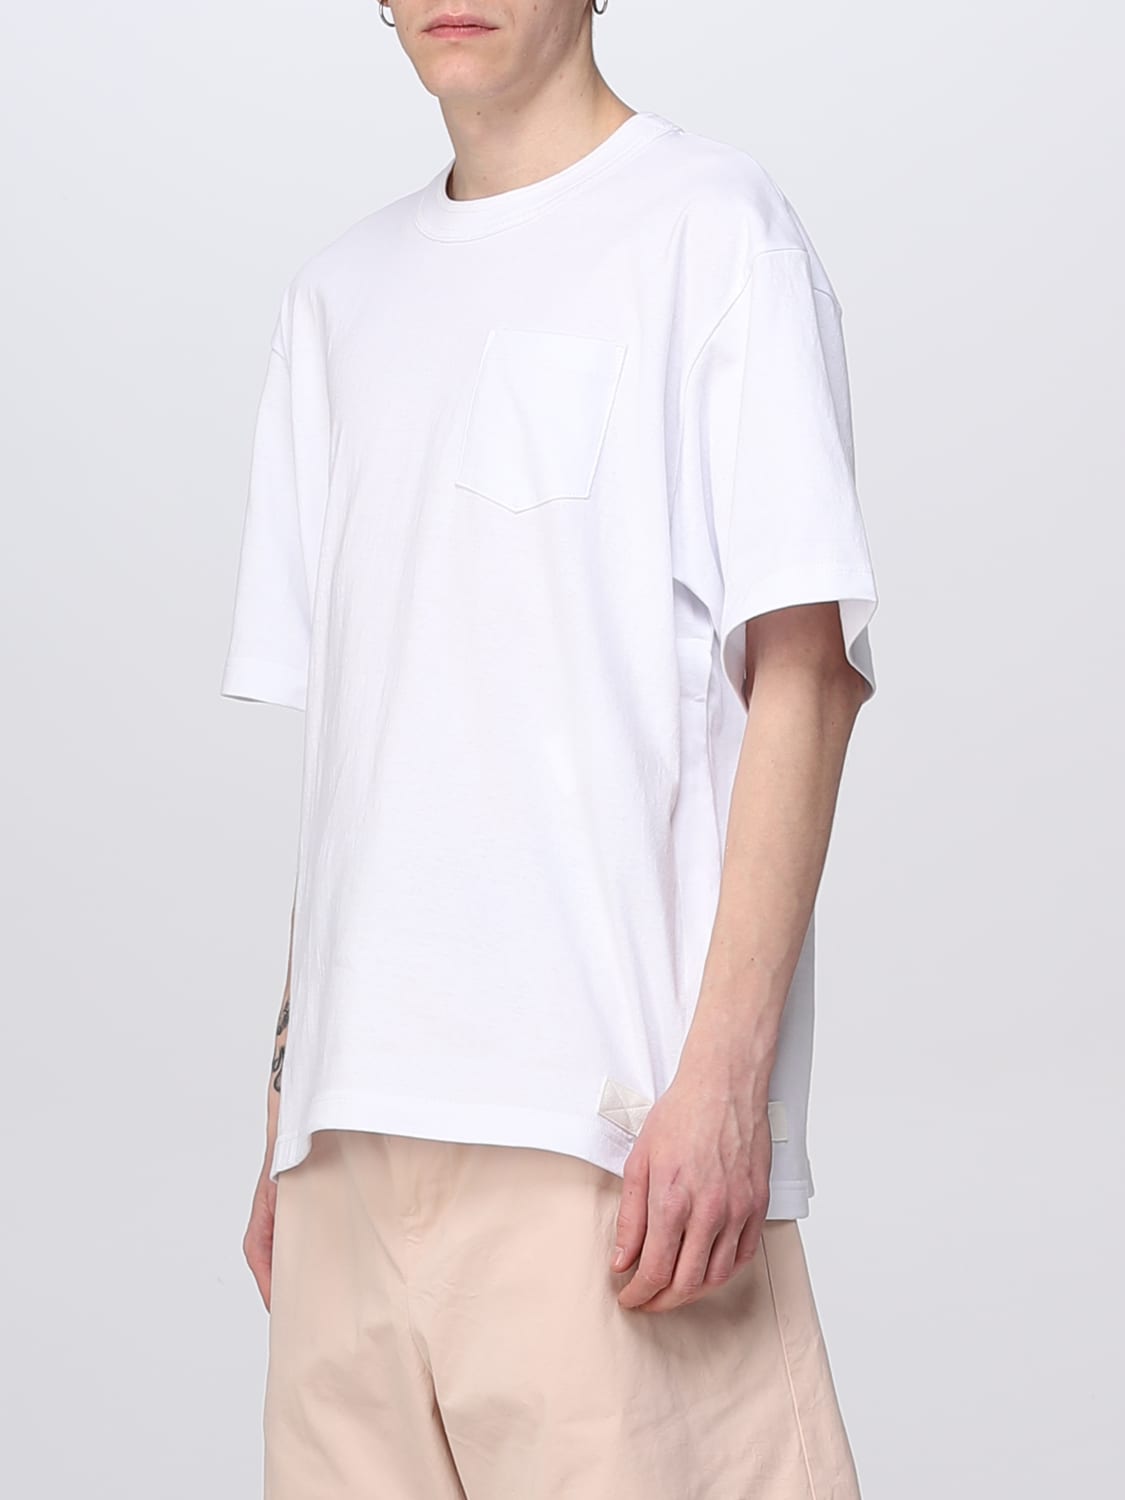 Sacai Outlet: t-shirt for man - White | Sacai t-shirt 2303061M